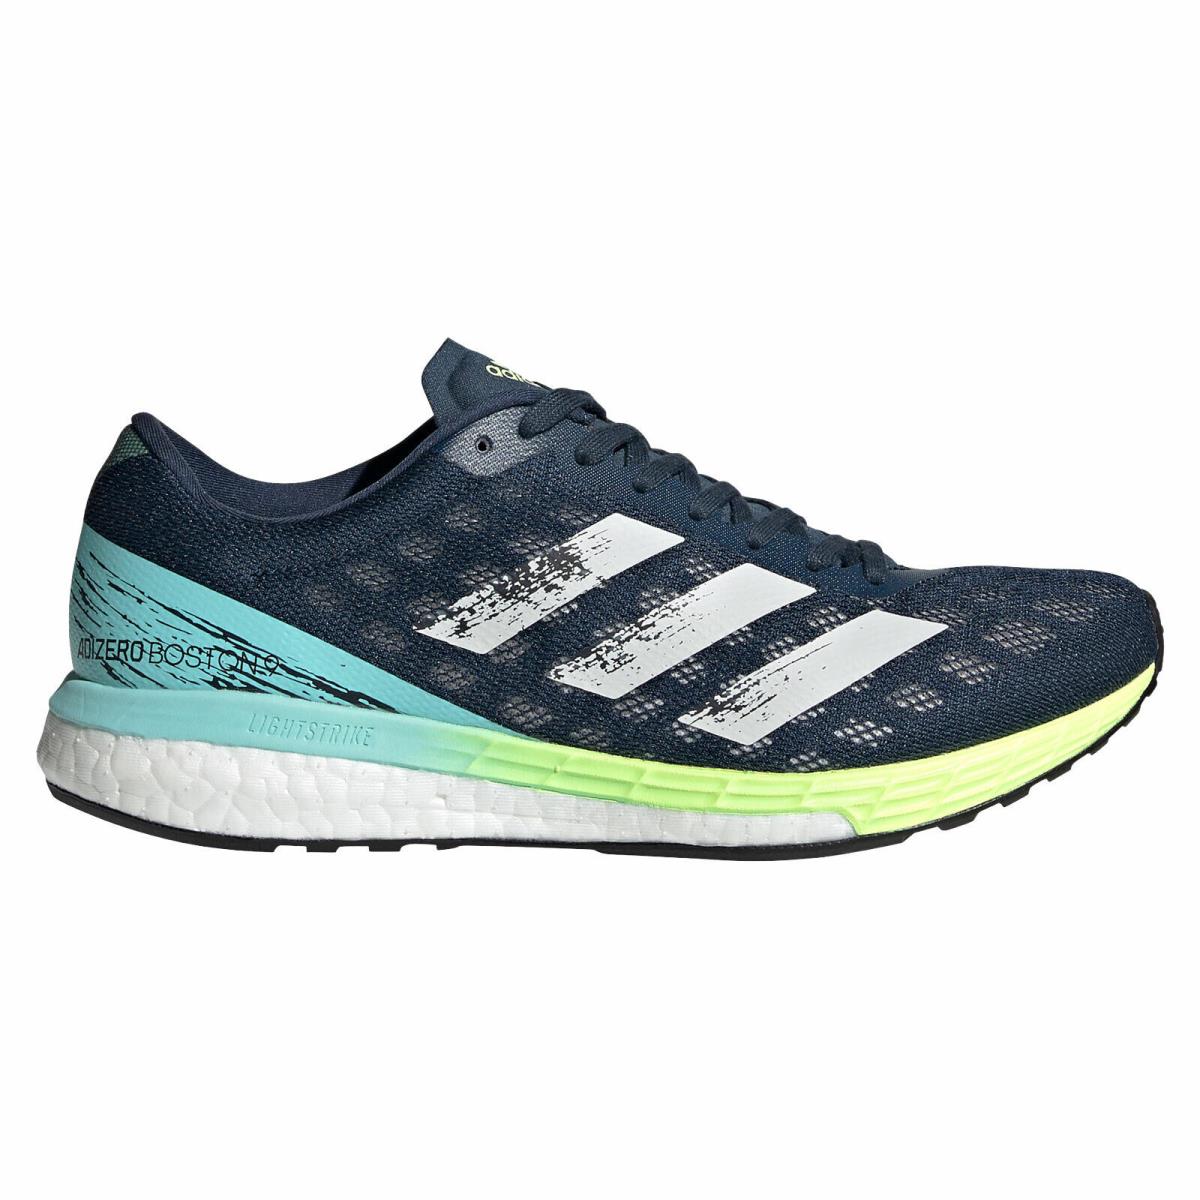 Adidas shoes adizero boston - Blue 1